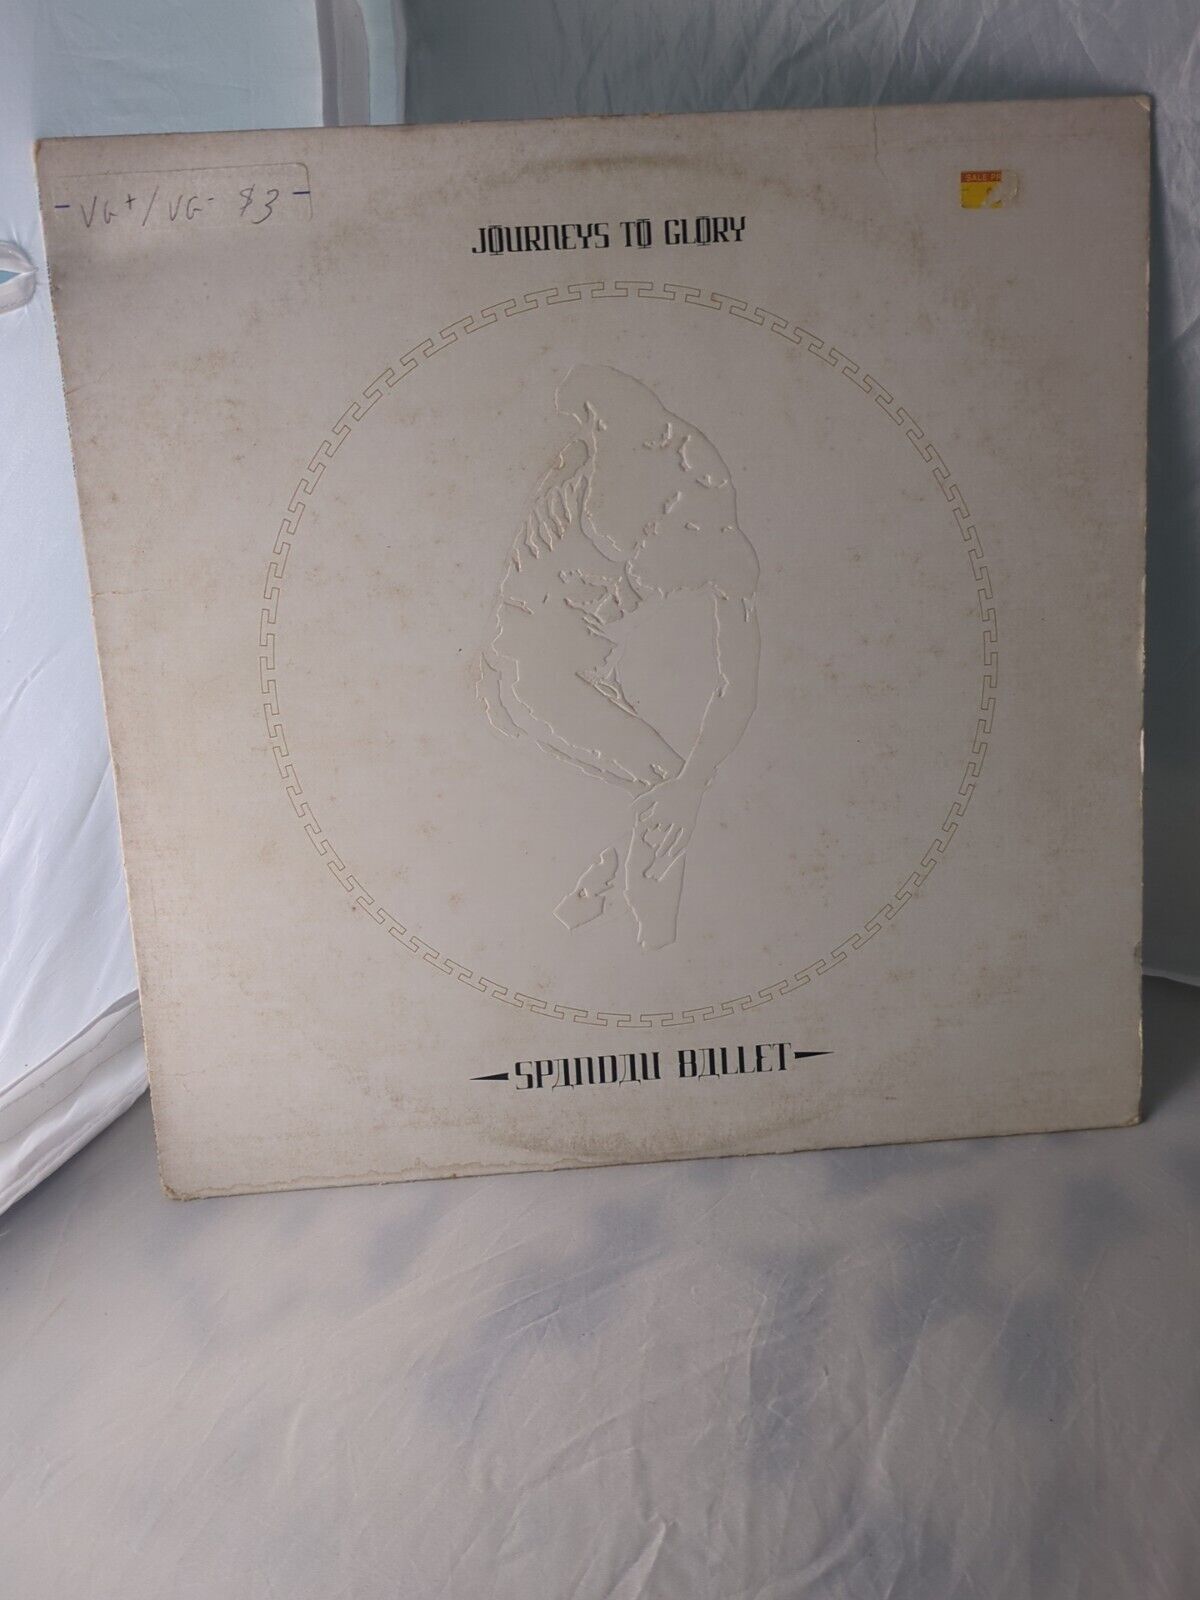 JOURNEYS TO GLORY By SPANDAU BALLET 1981 Vinyl LP Album CHRYSALIS - CG C70